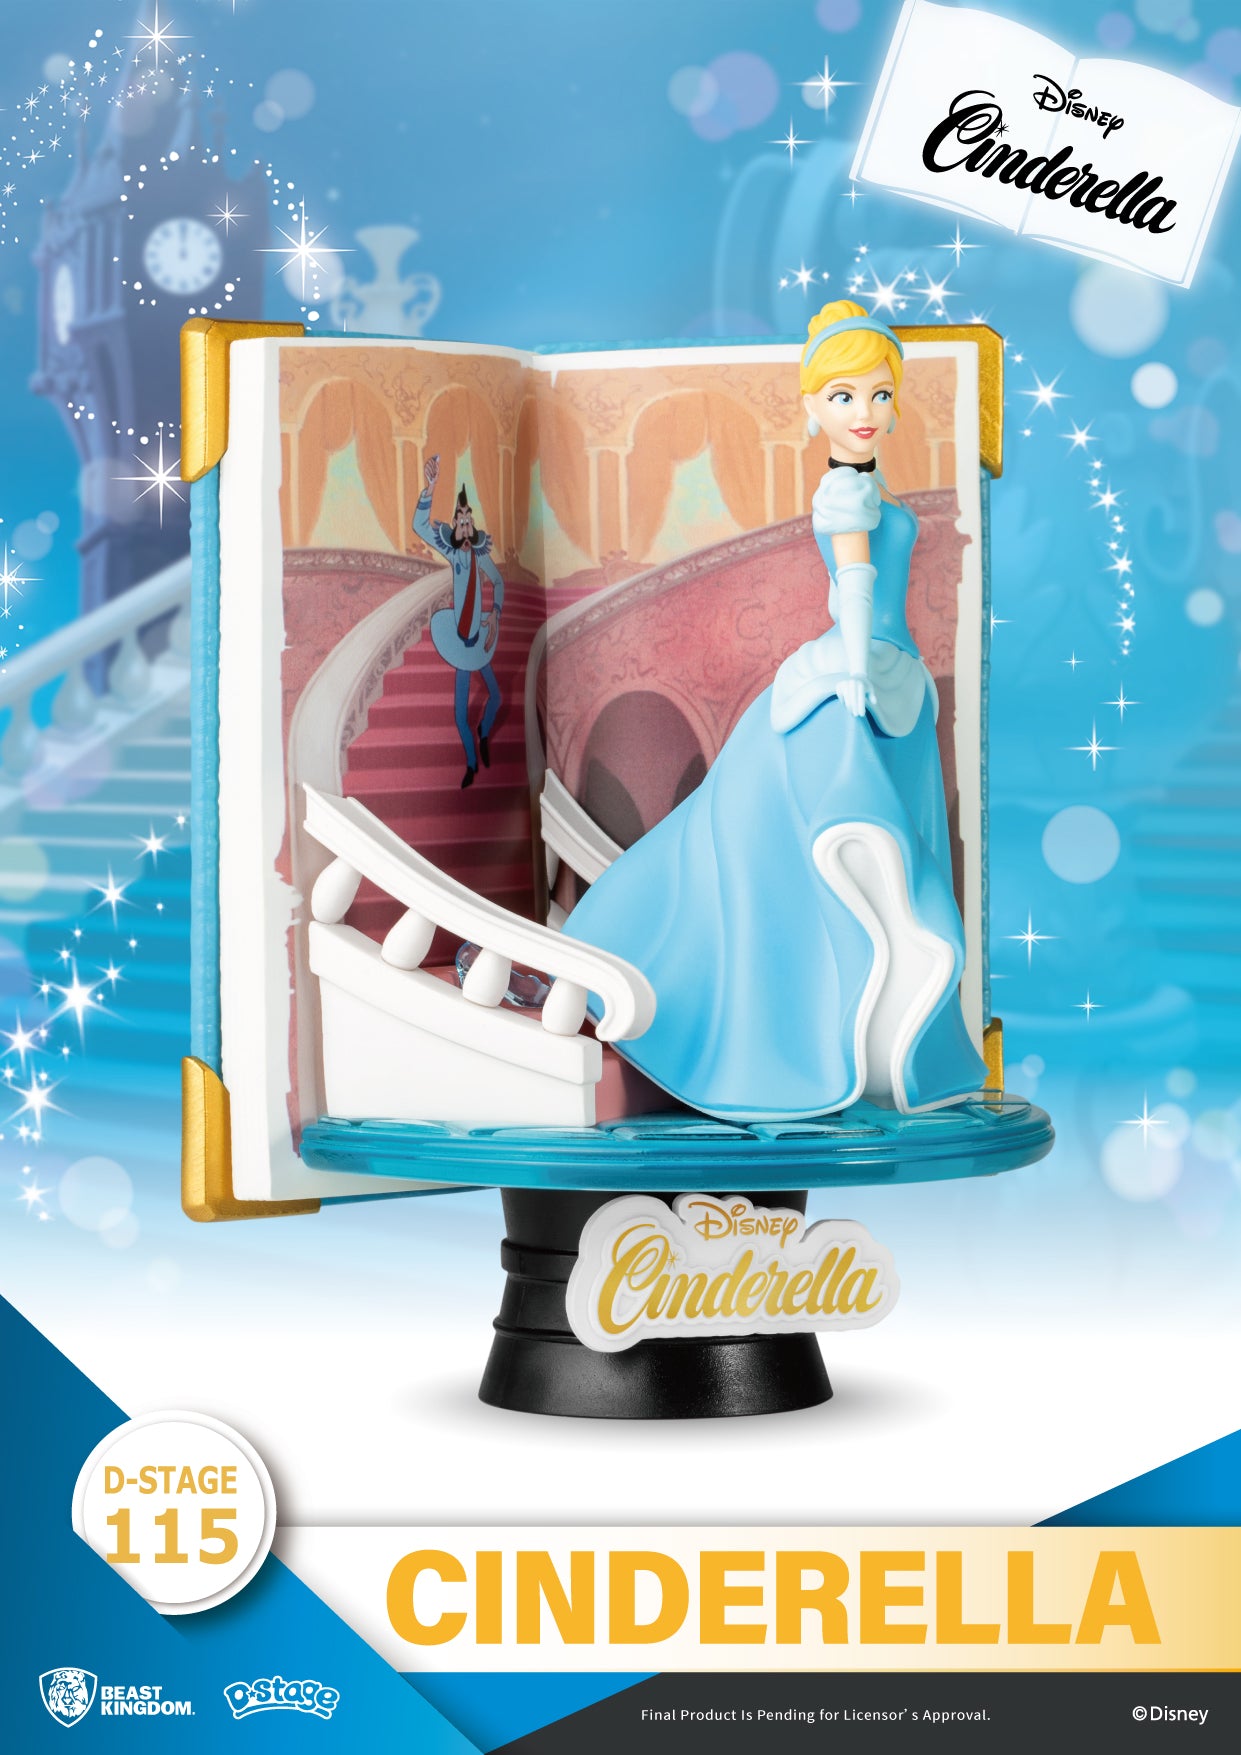 Beast Kingdom DS-115 Disney Story Book Series: Cinderella Diorama Stage D-Stage Figure Statue